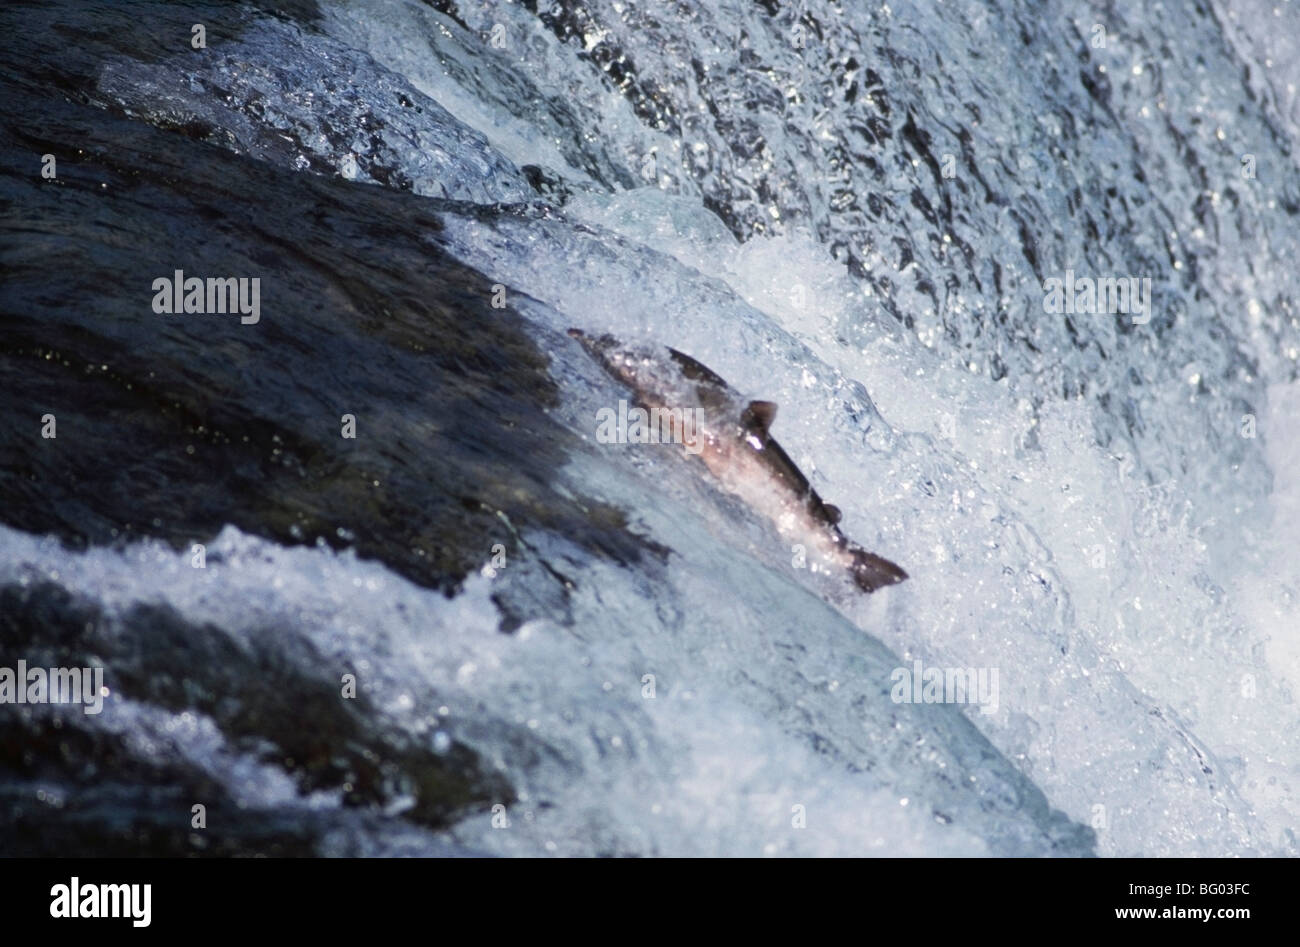 Salmon ascending waterfall, Katami National Park, Alaska Stock Photo